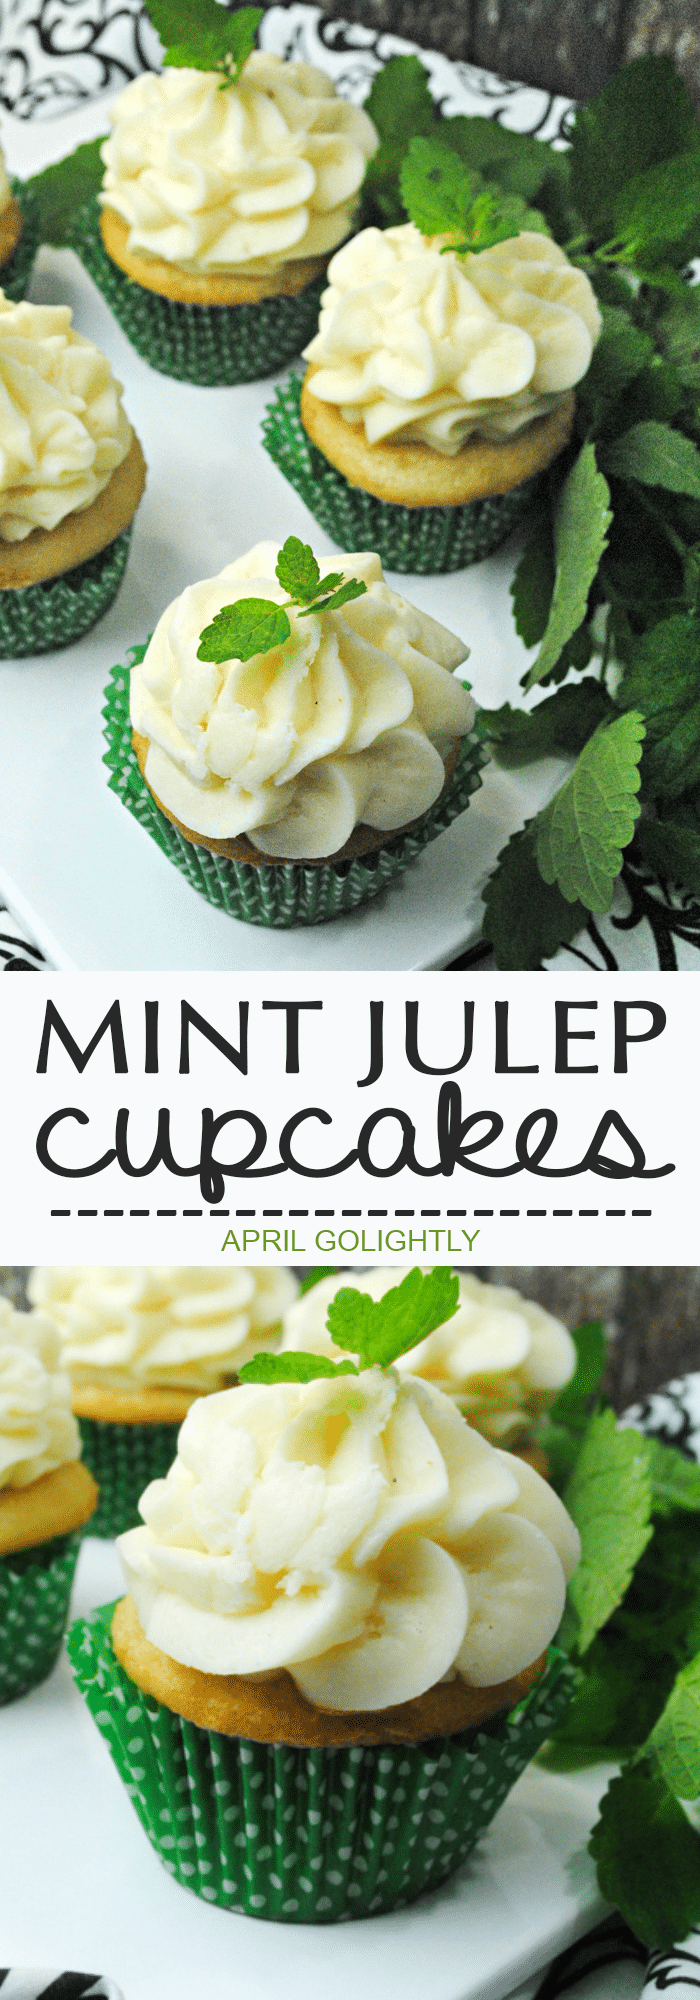 Easy Mint Julep Cupcakes Recipe